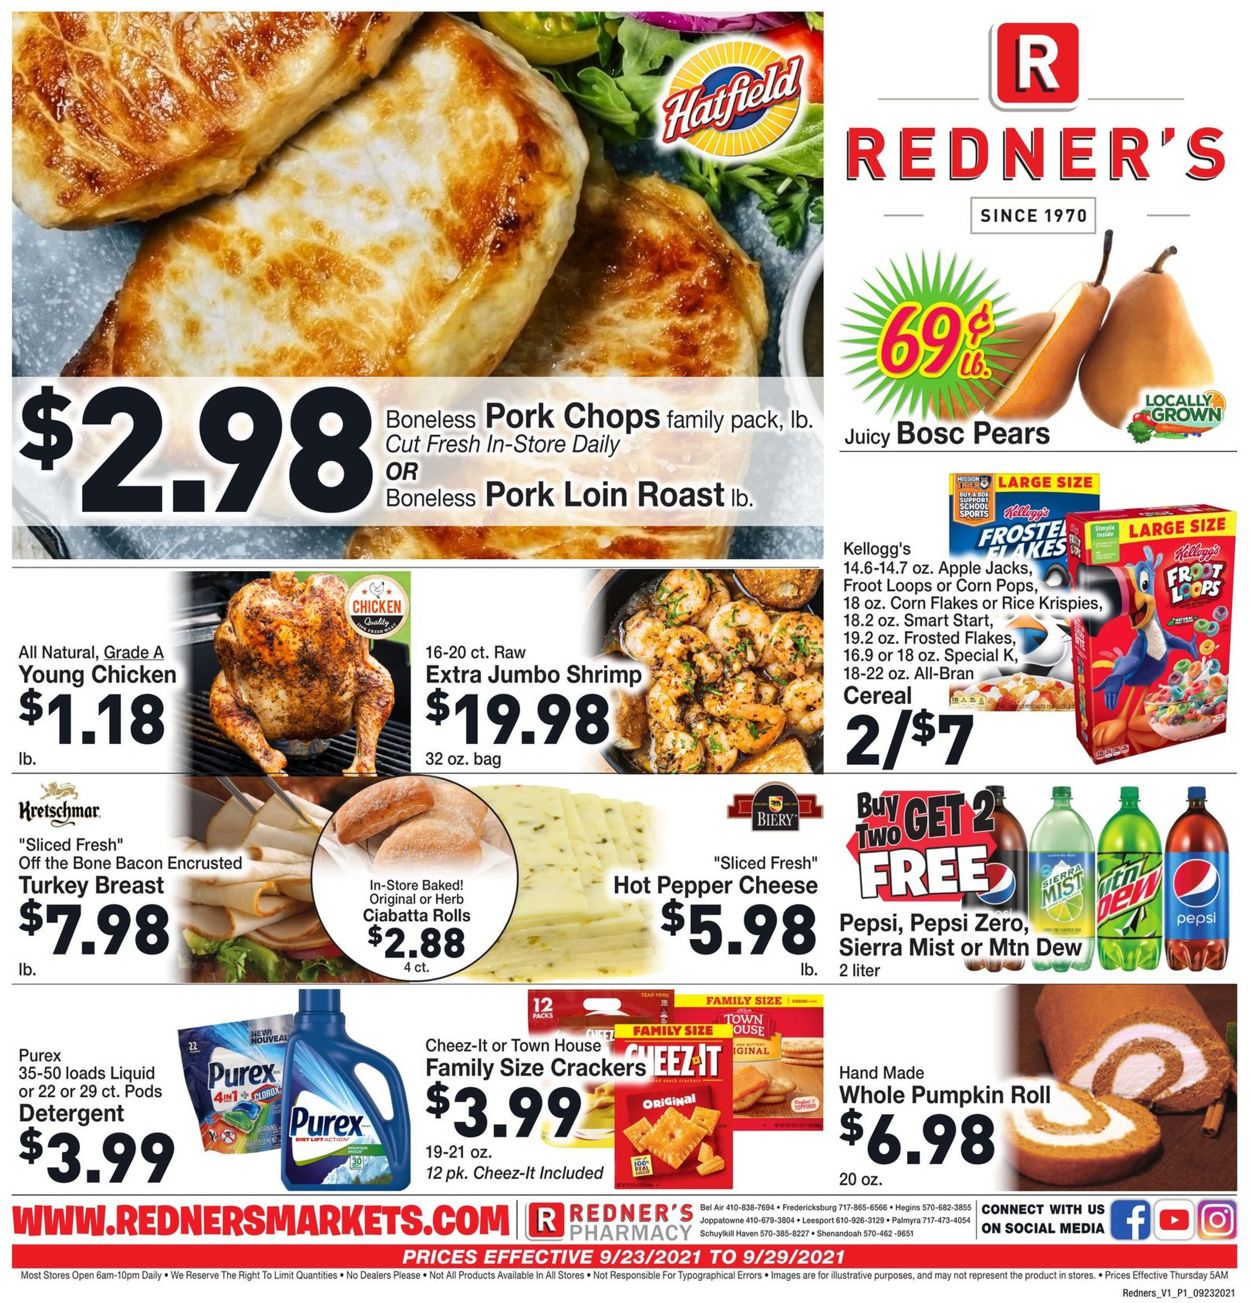 Redner’s Warehouse Market Ad from 09/23/2021